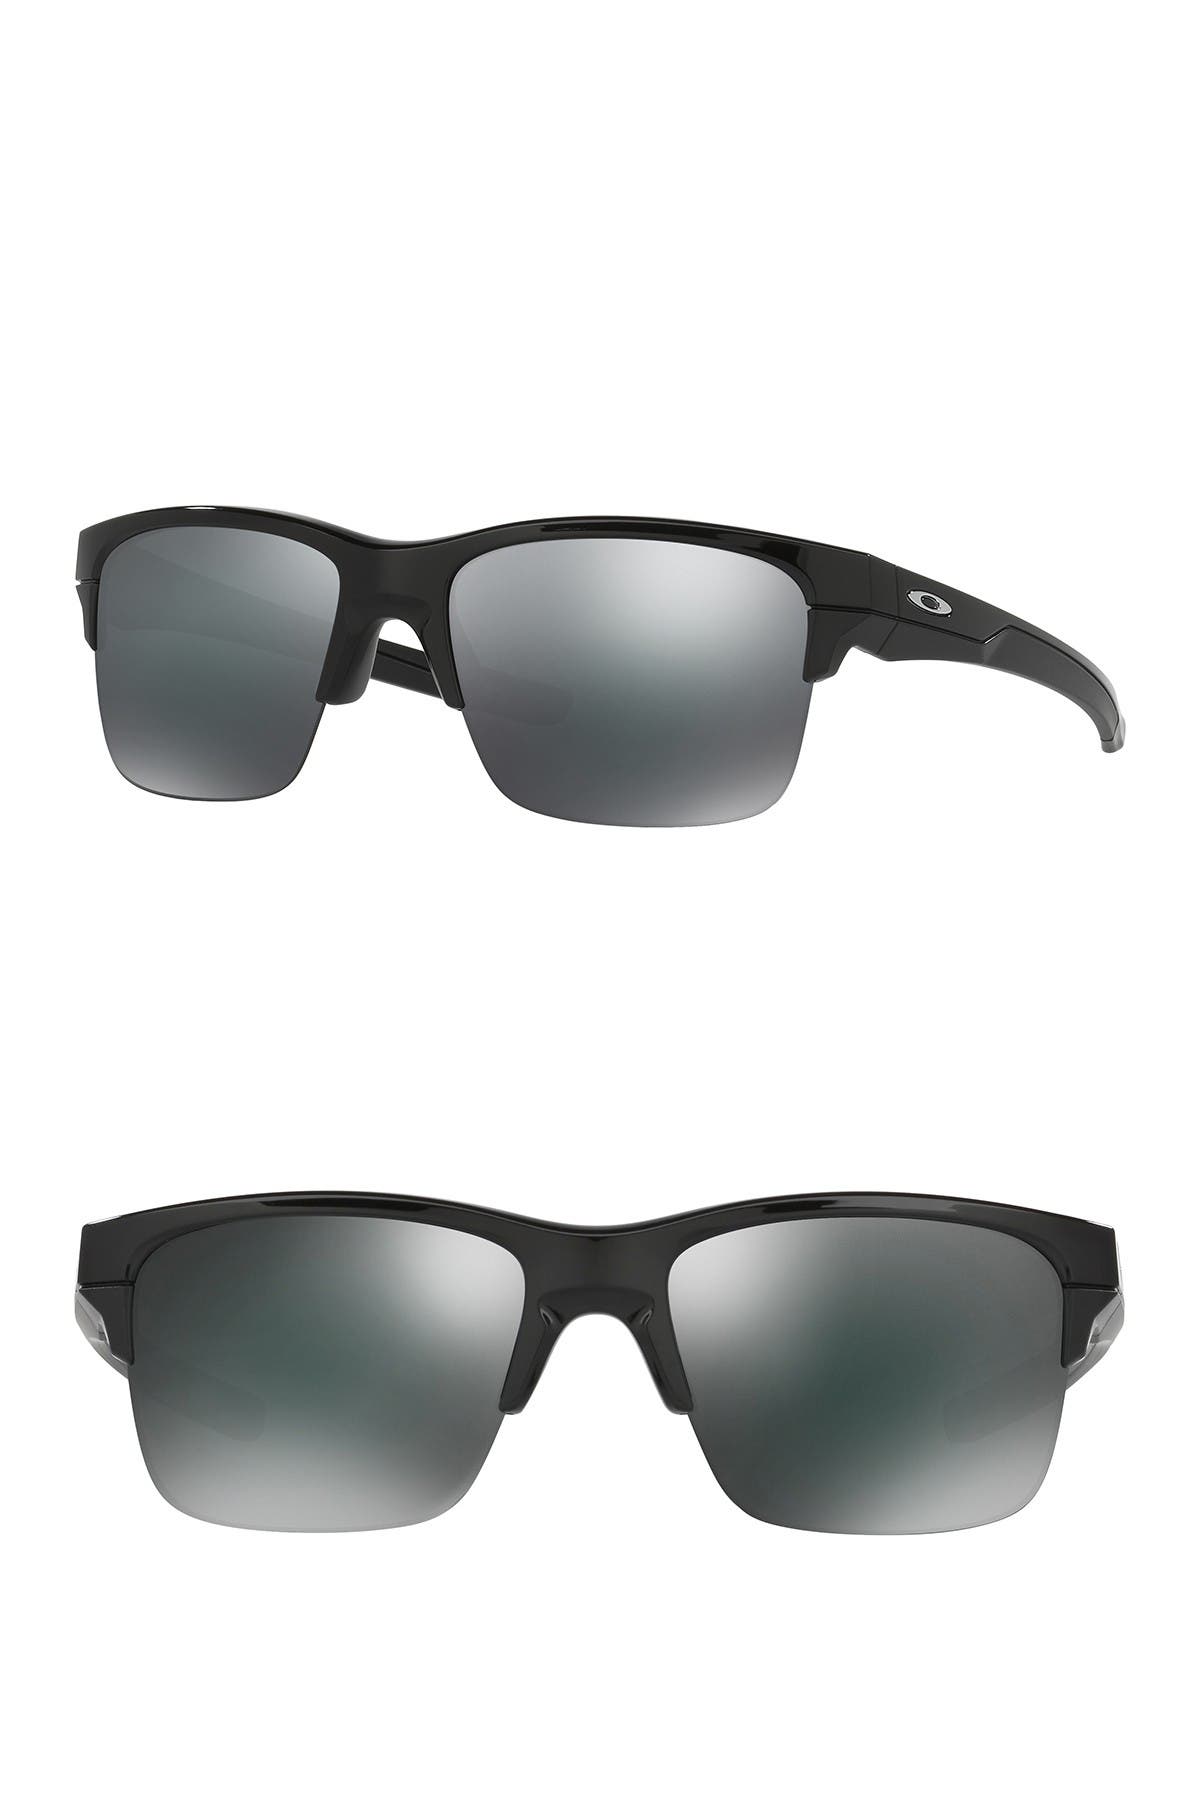 thinlink oakley sunglasses